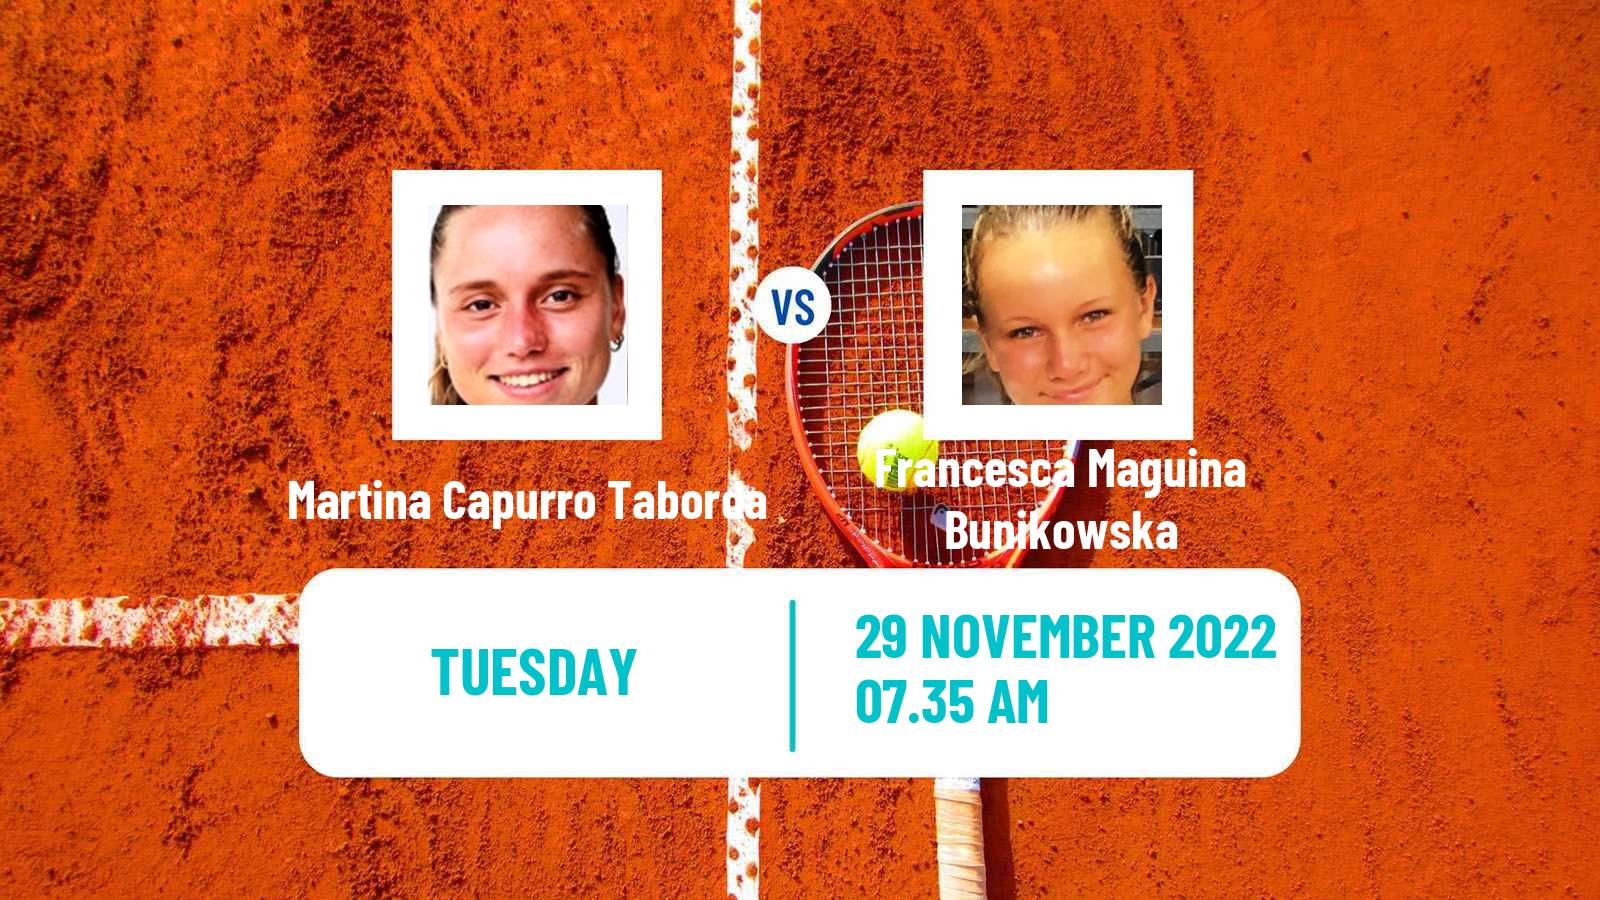 Tennis ITF Tournaments Martina Capurro Taborda - Francesca Maguina Bunikowska